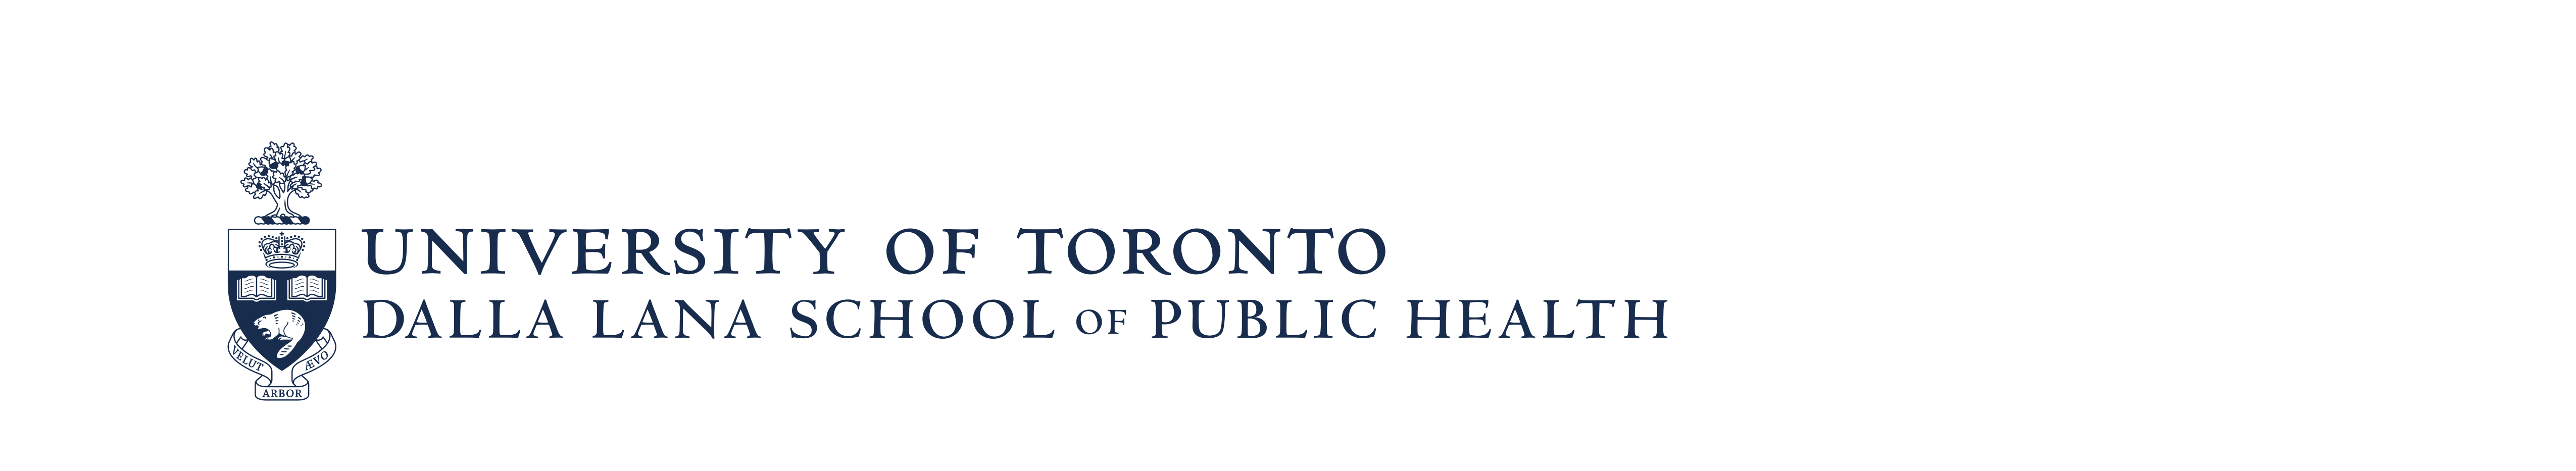 Dalla Lana School of public health logo